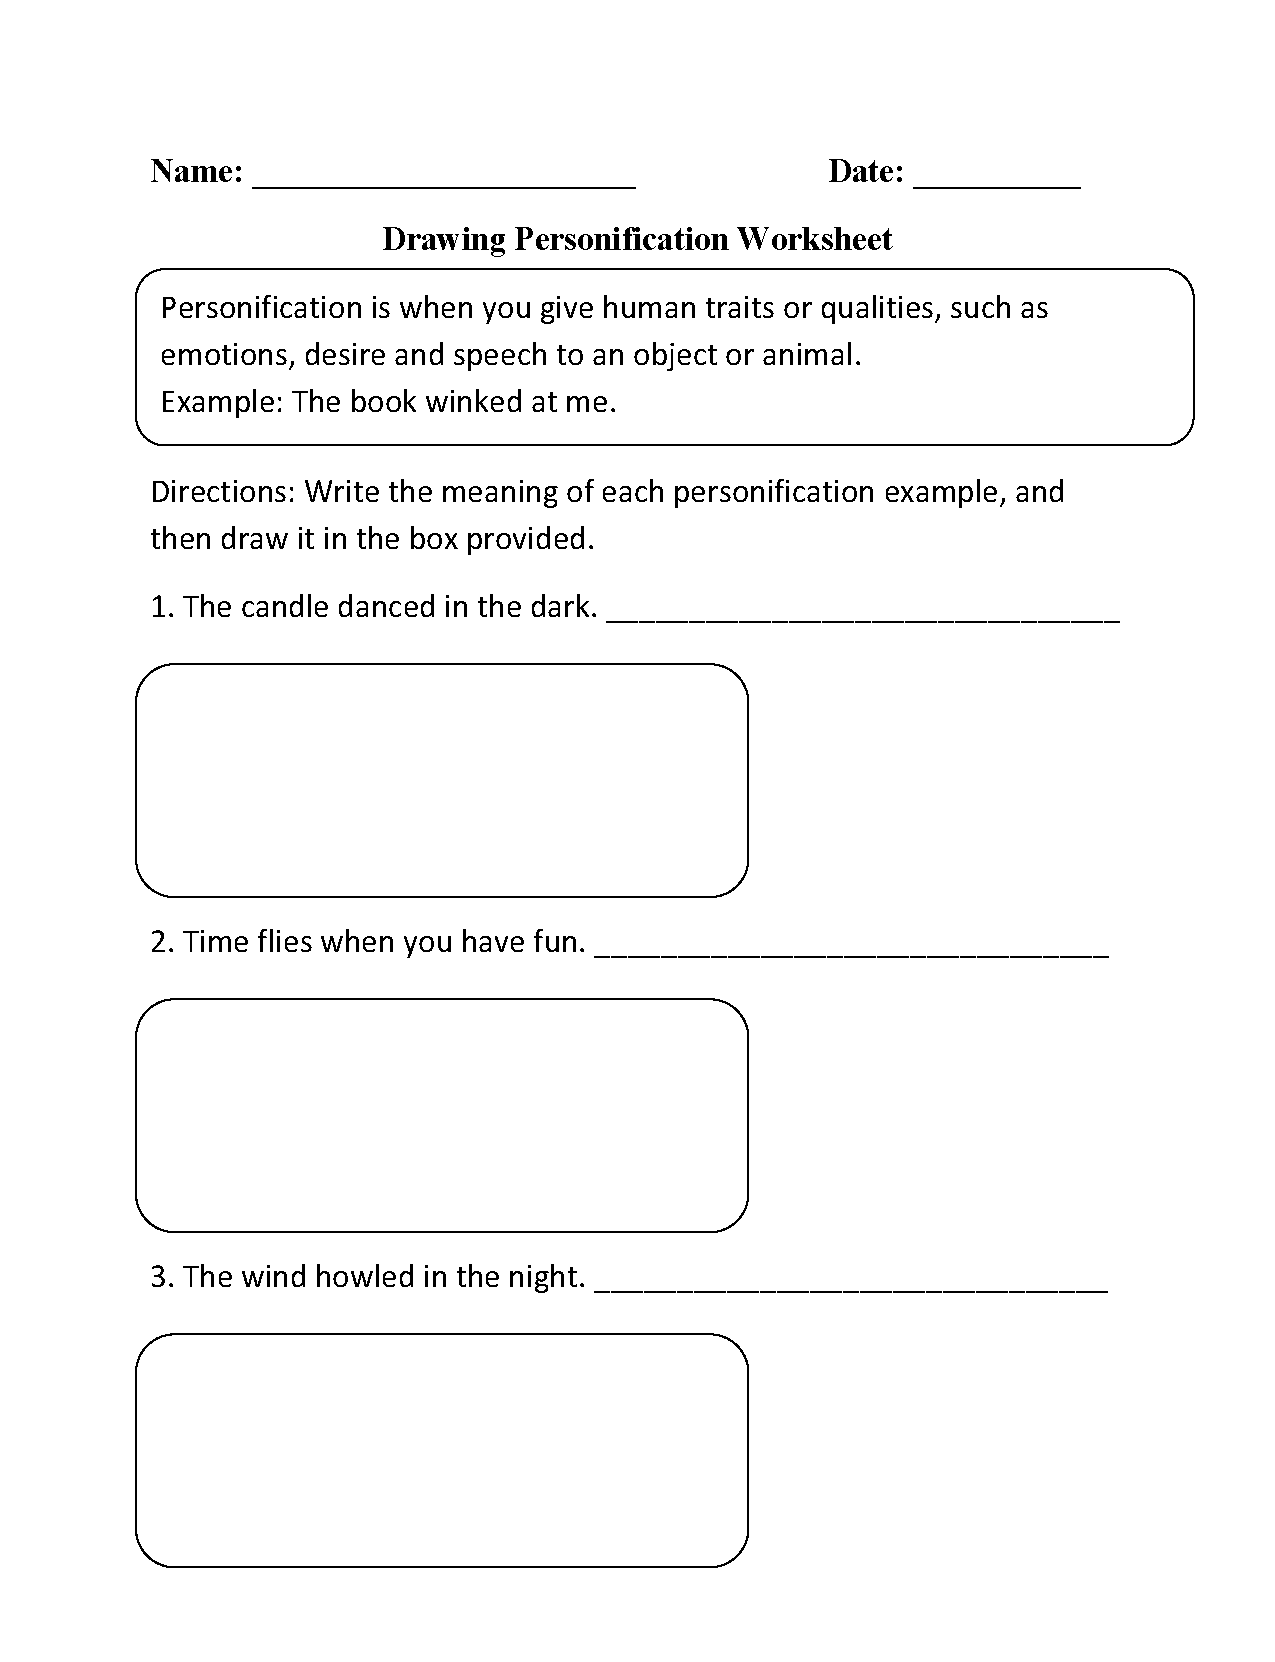 Drawing Personifcation Worksheet Figurative Language Worksheet 